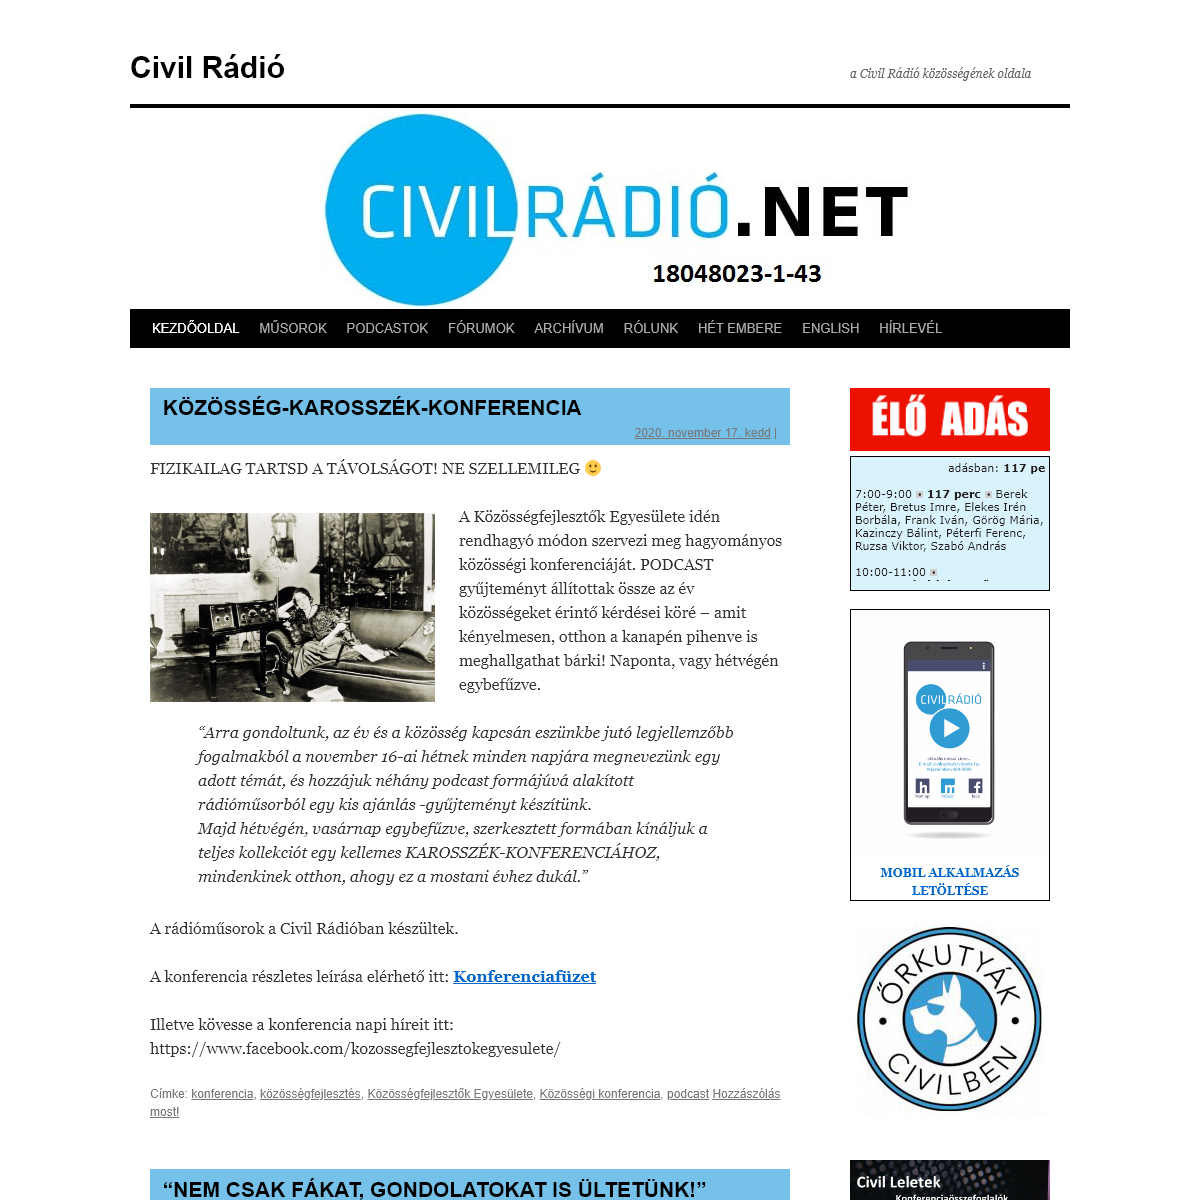 A complete backup of civilradio.hu